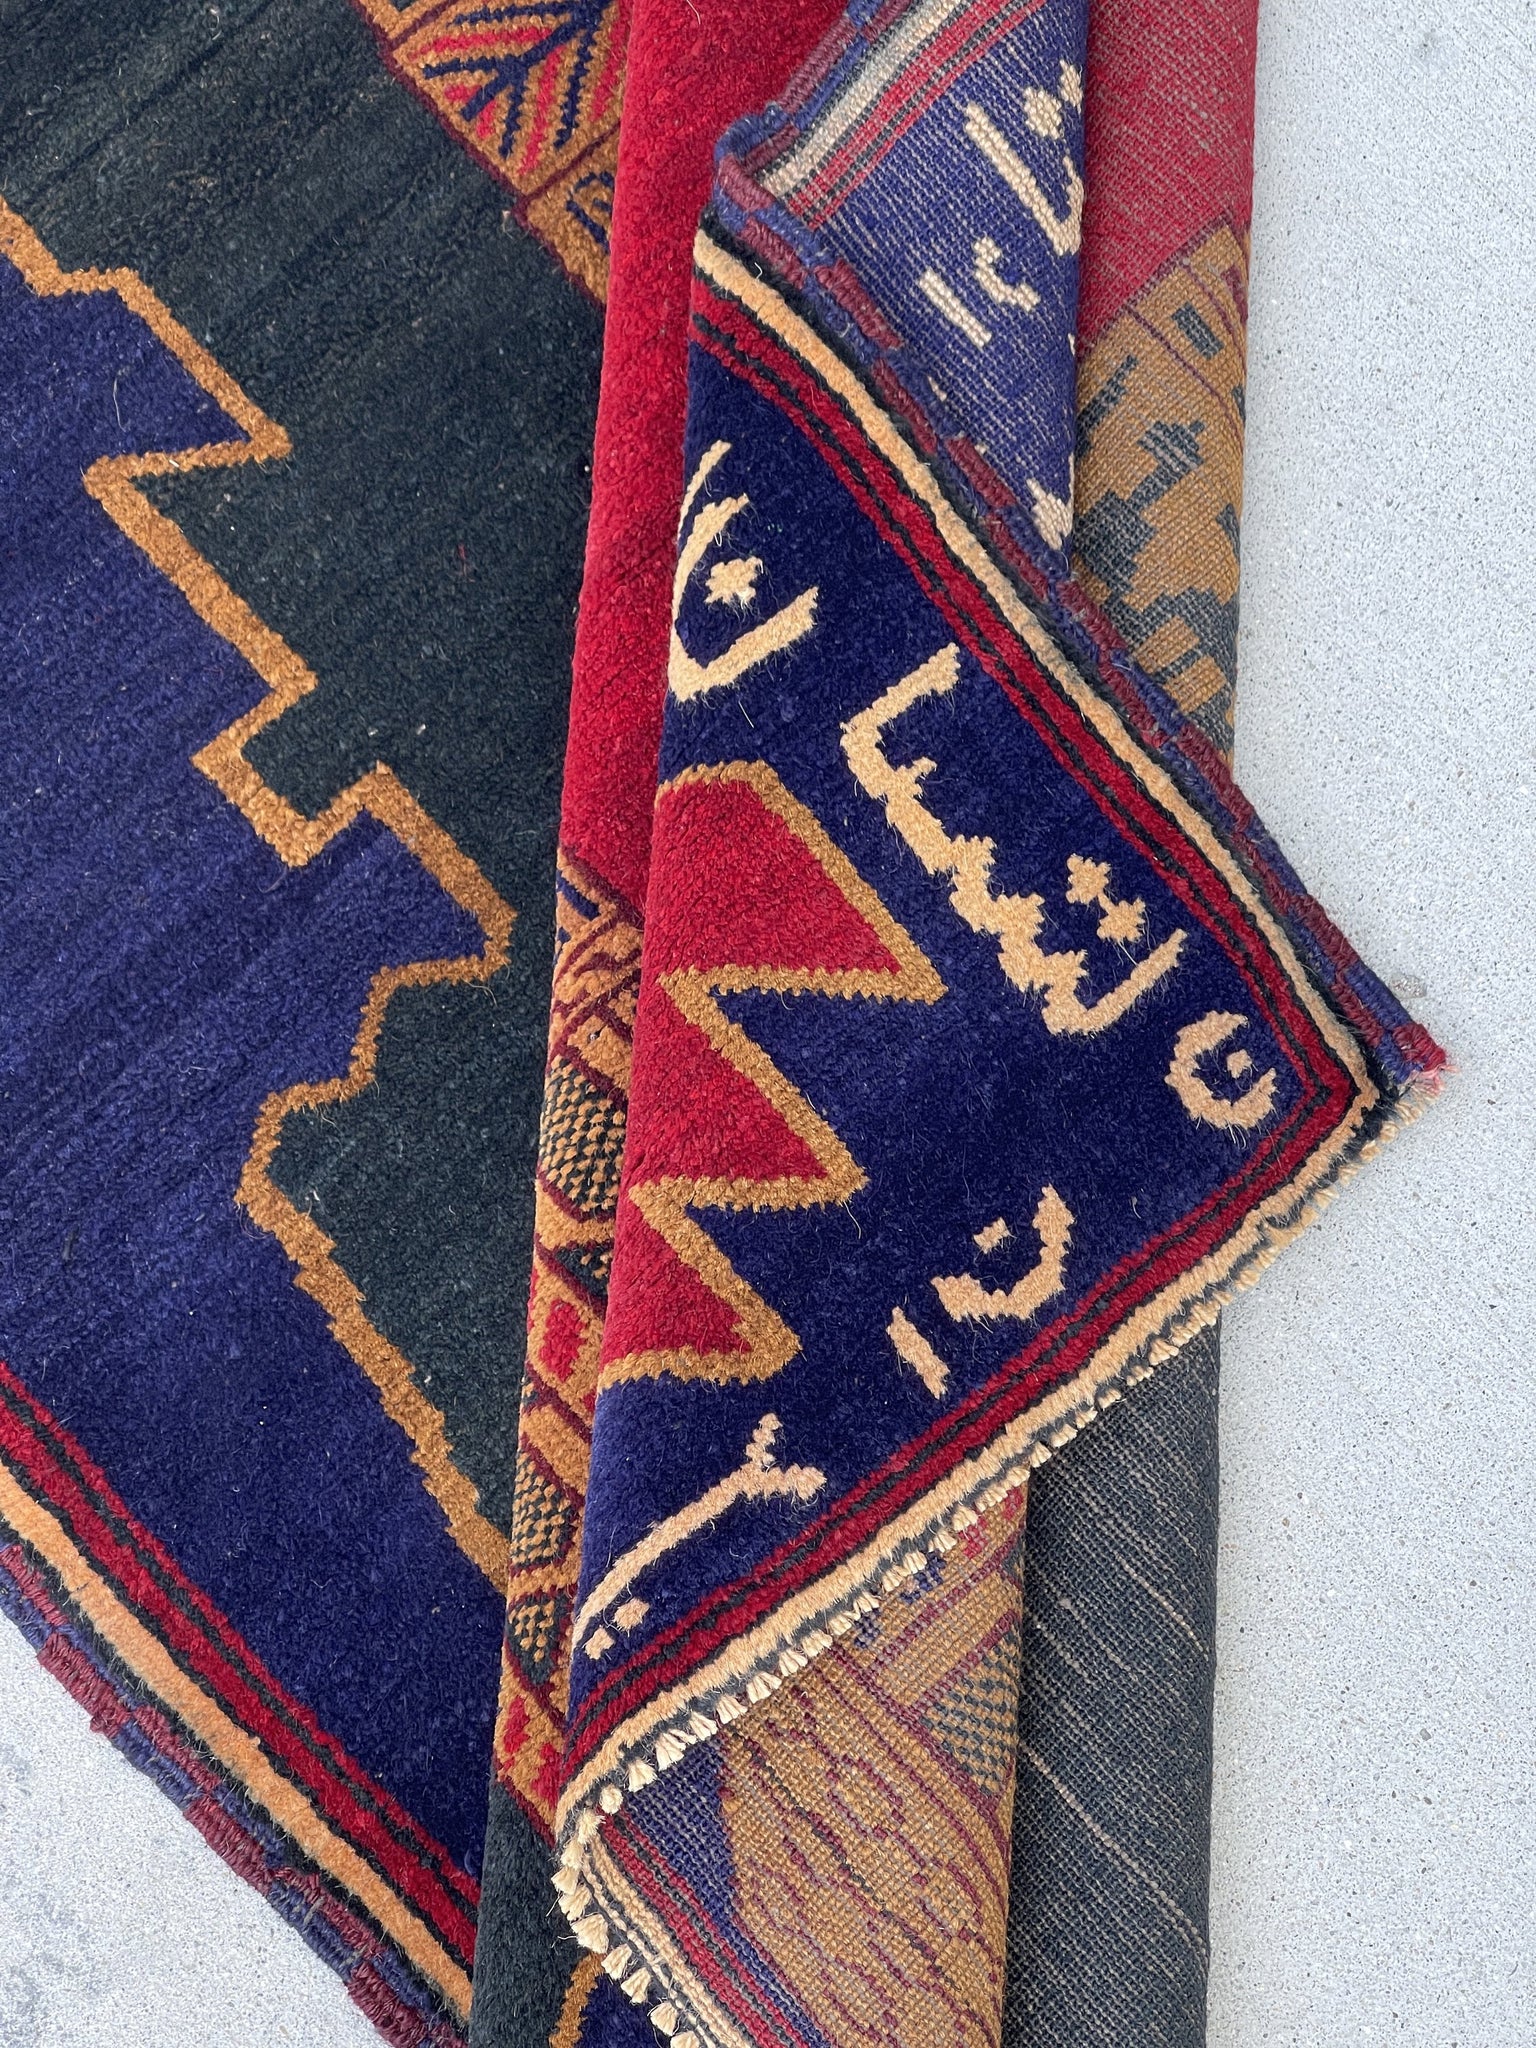 3x5 (90x150) Handmade Vintage Afghan Rug | Navy Blue Green Orange Red | Nomadic Baluch Boho Bohemian Tribal Turkish Moroccan Wool